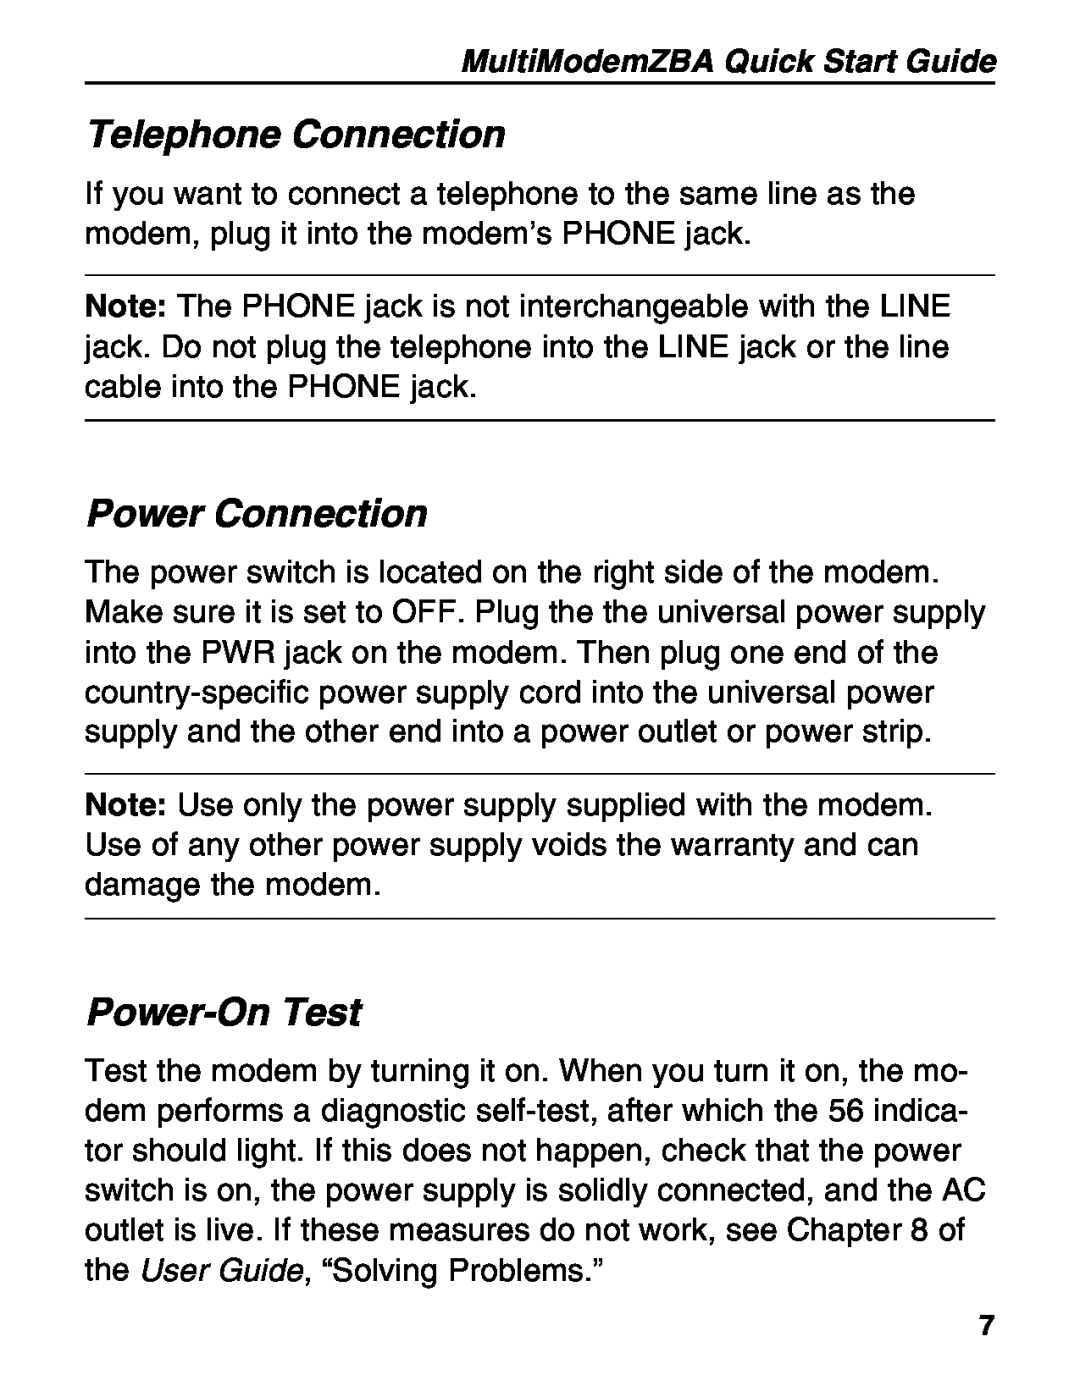 Multitech MT5634ZBA-V92 manual Telephone Connection, Power Connection, Power-On Test, MultiModemZBA Quick Start Guide 